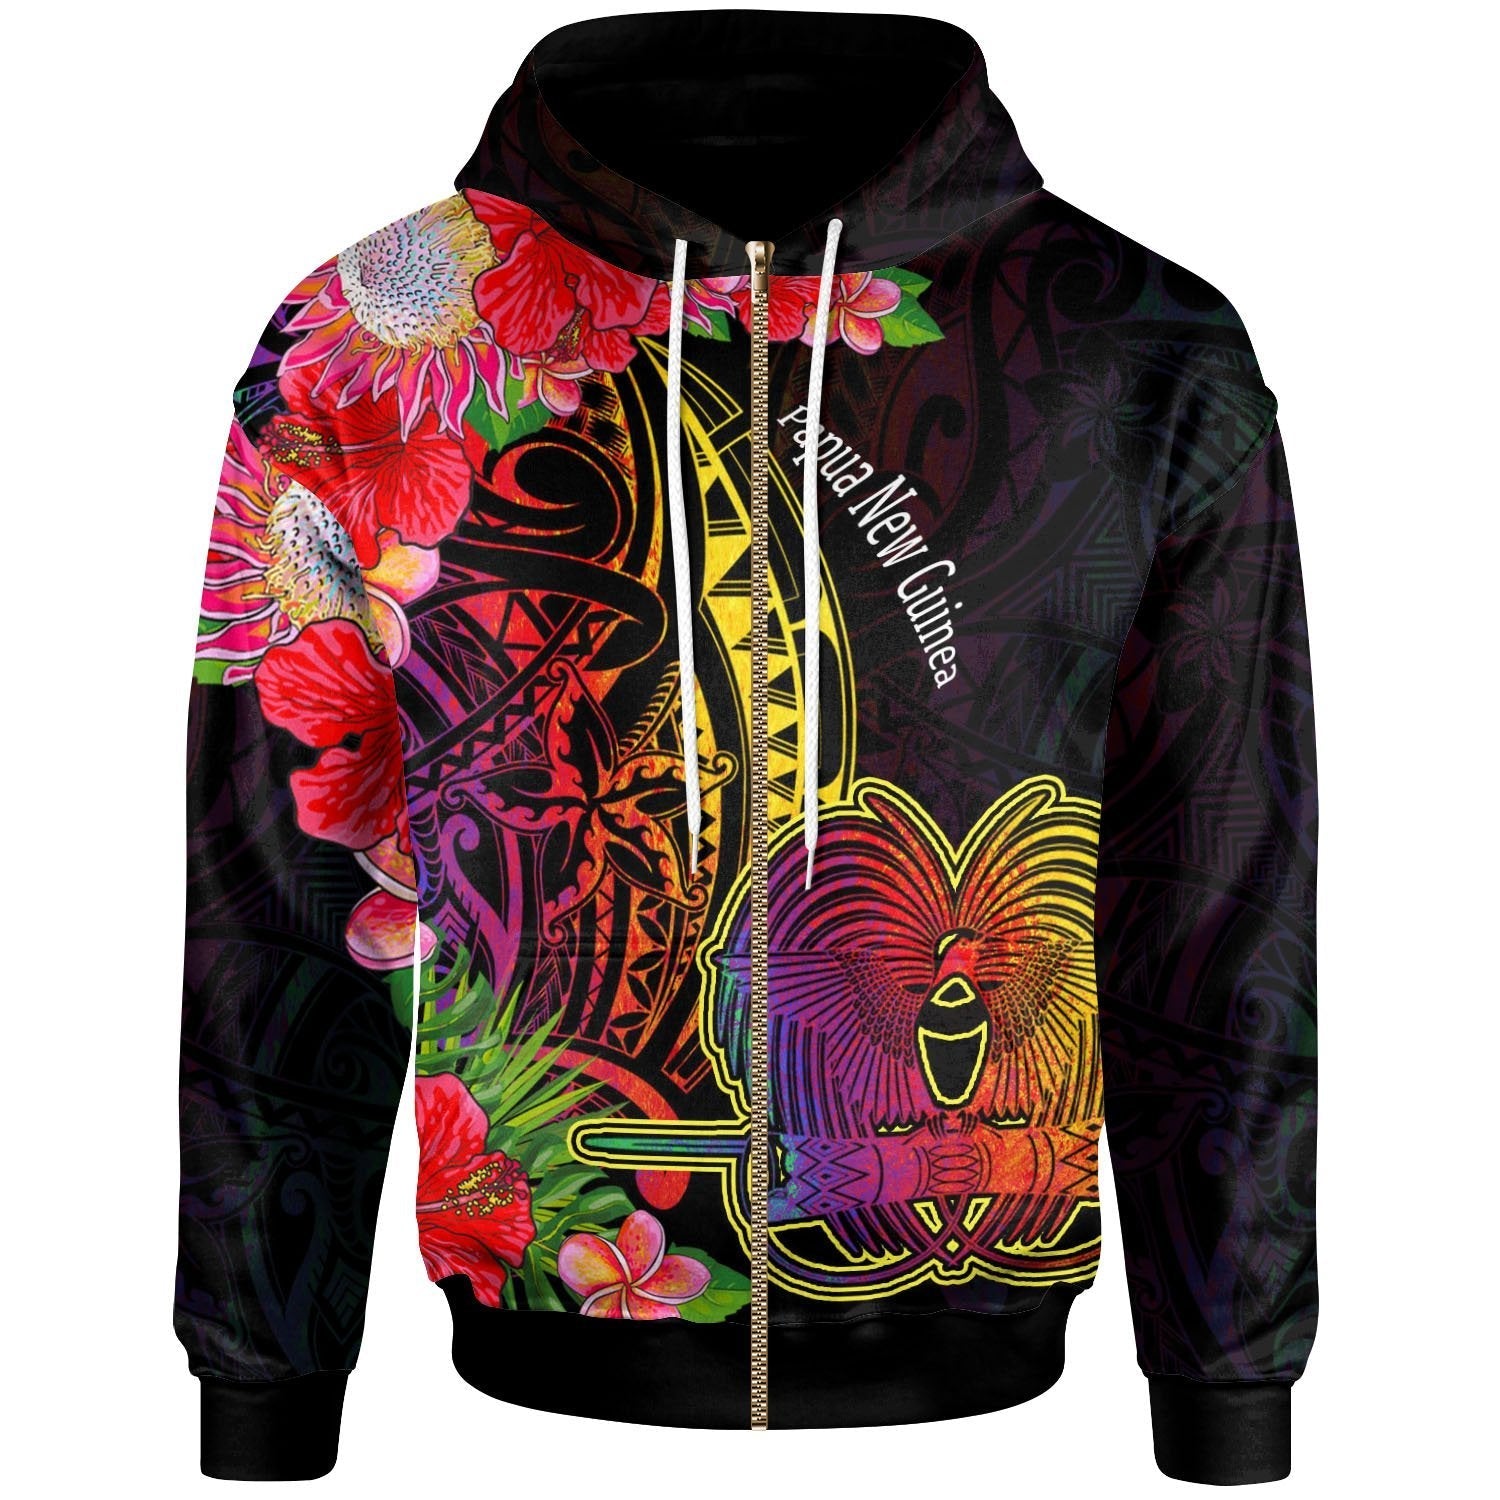 papua-new-guinea-zip-hoodie-tropical-hippie-style